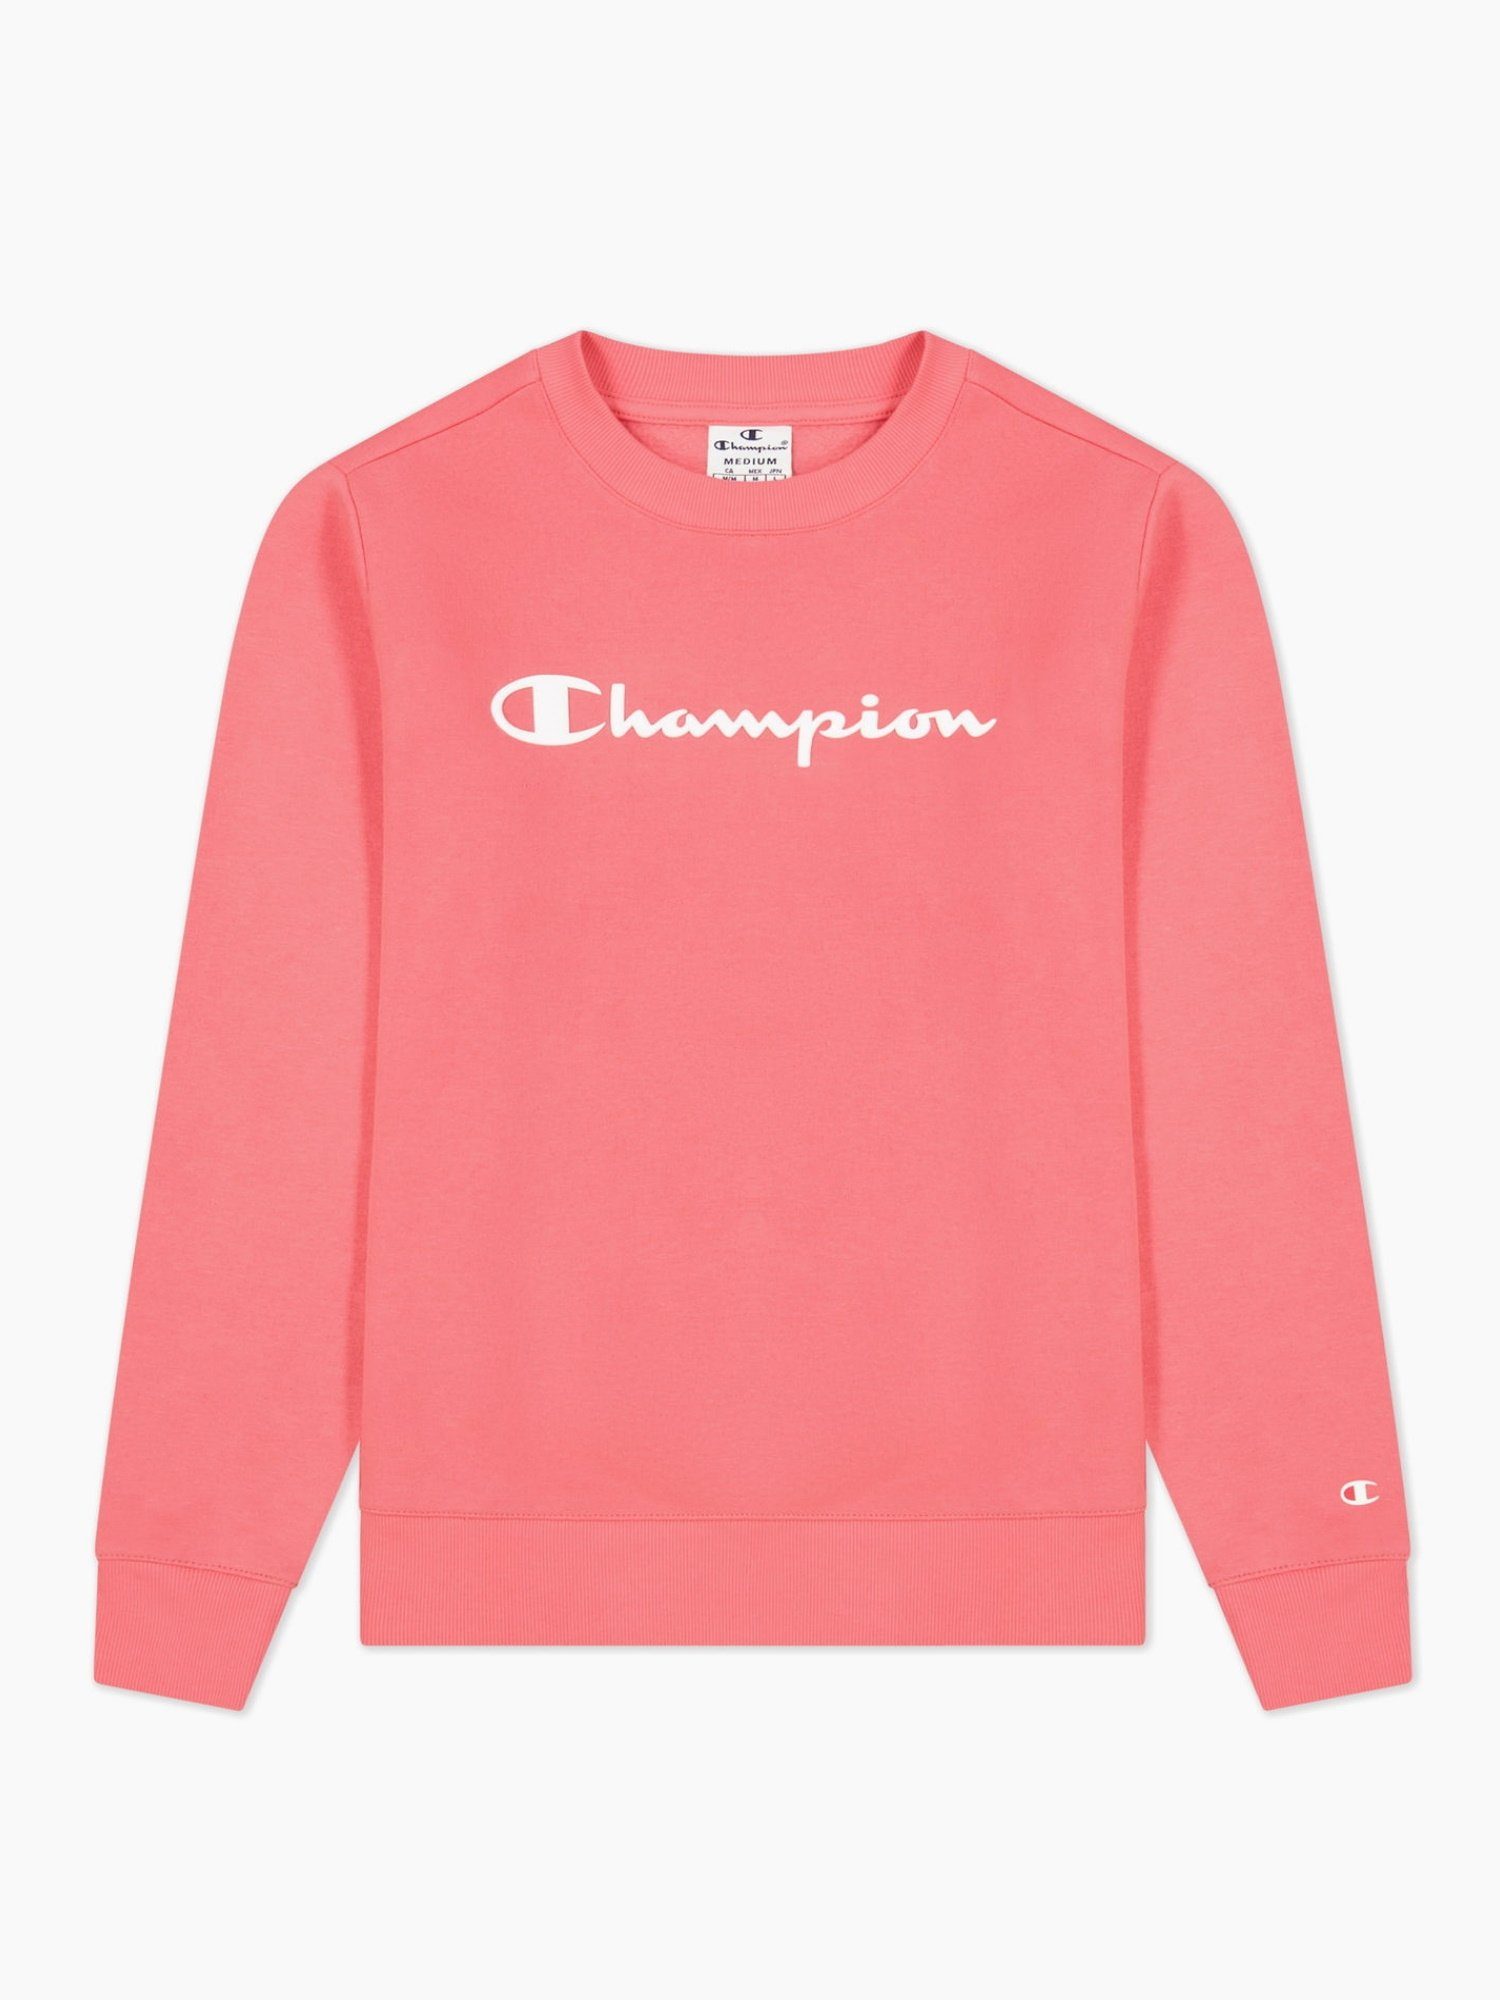 Sweatshirt Baumwollfleece rosa Champion mit Pullover Sweatshirt aus